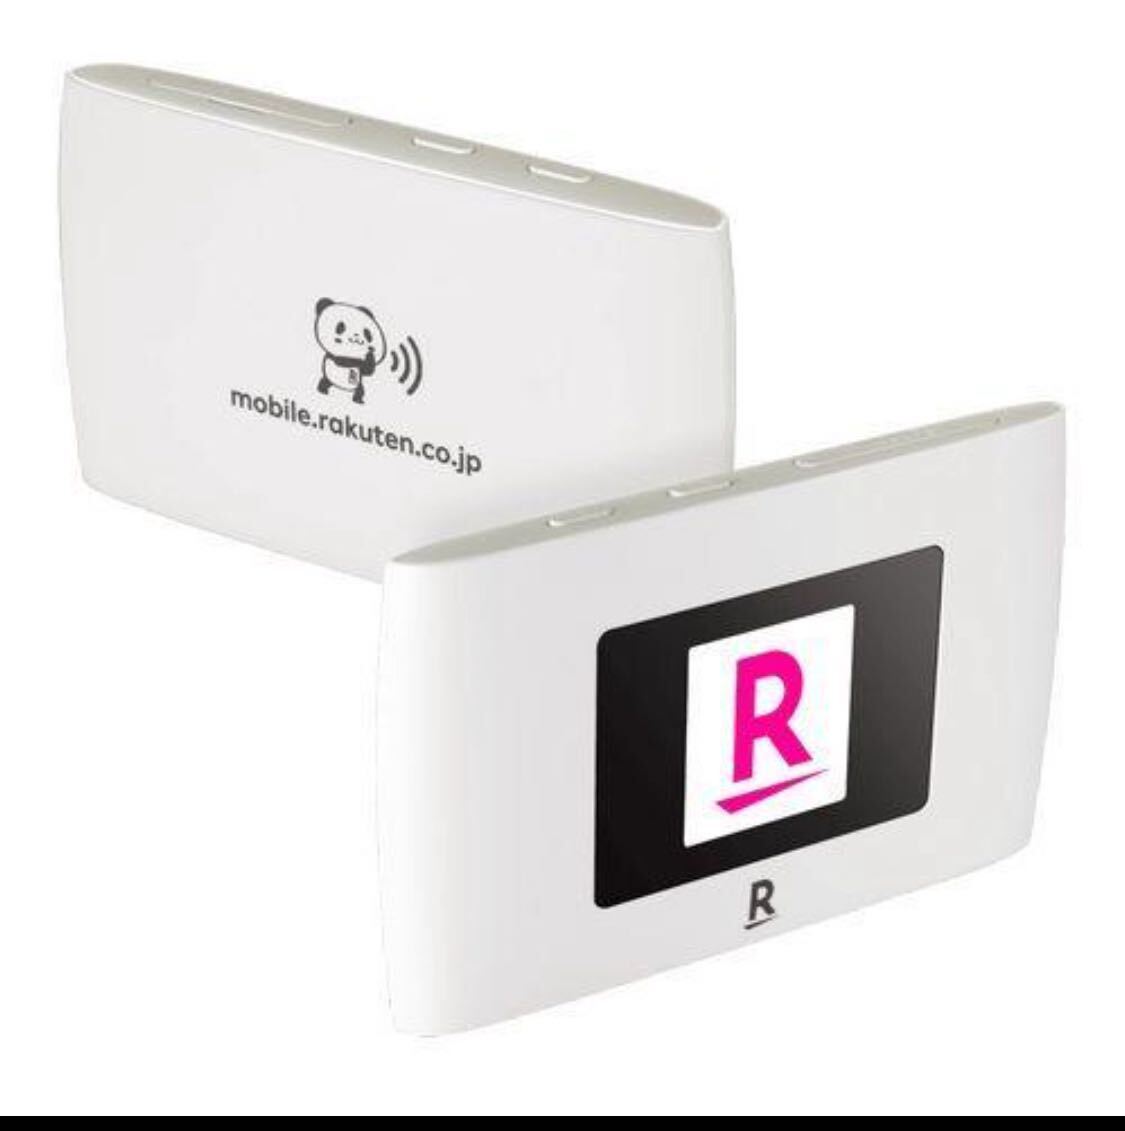 Rakuten Wi-Fi Pocket 2C 白 ホワイト